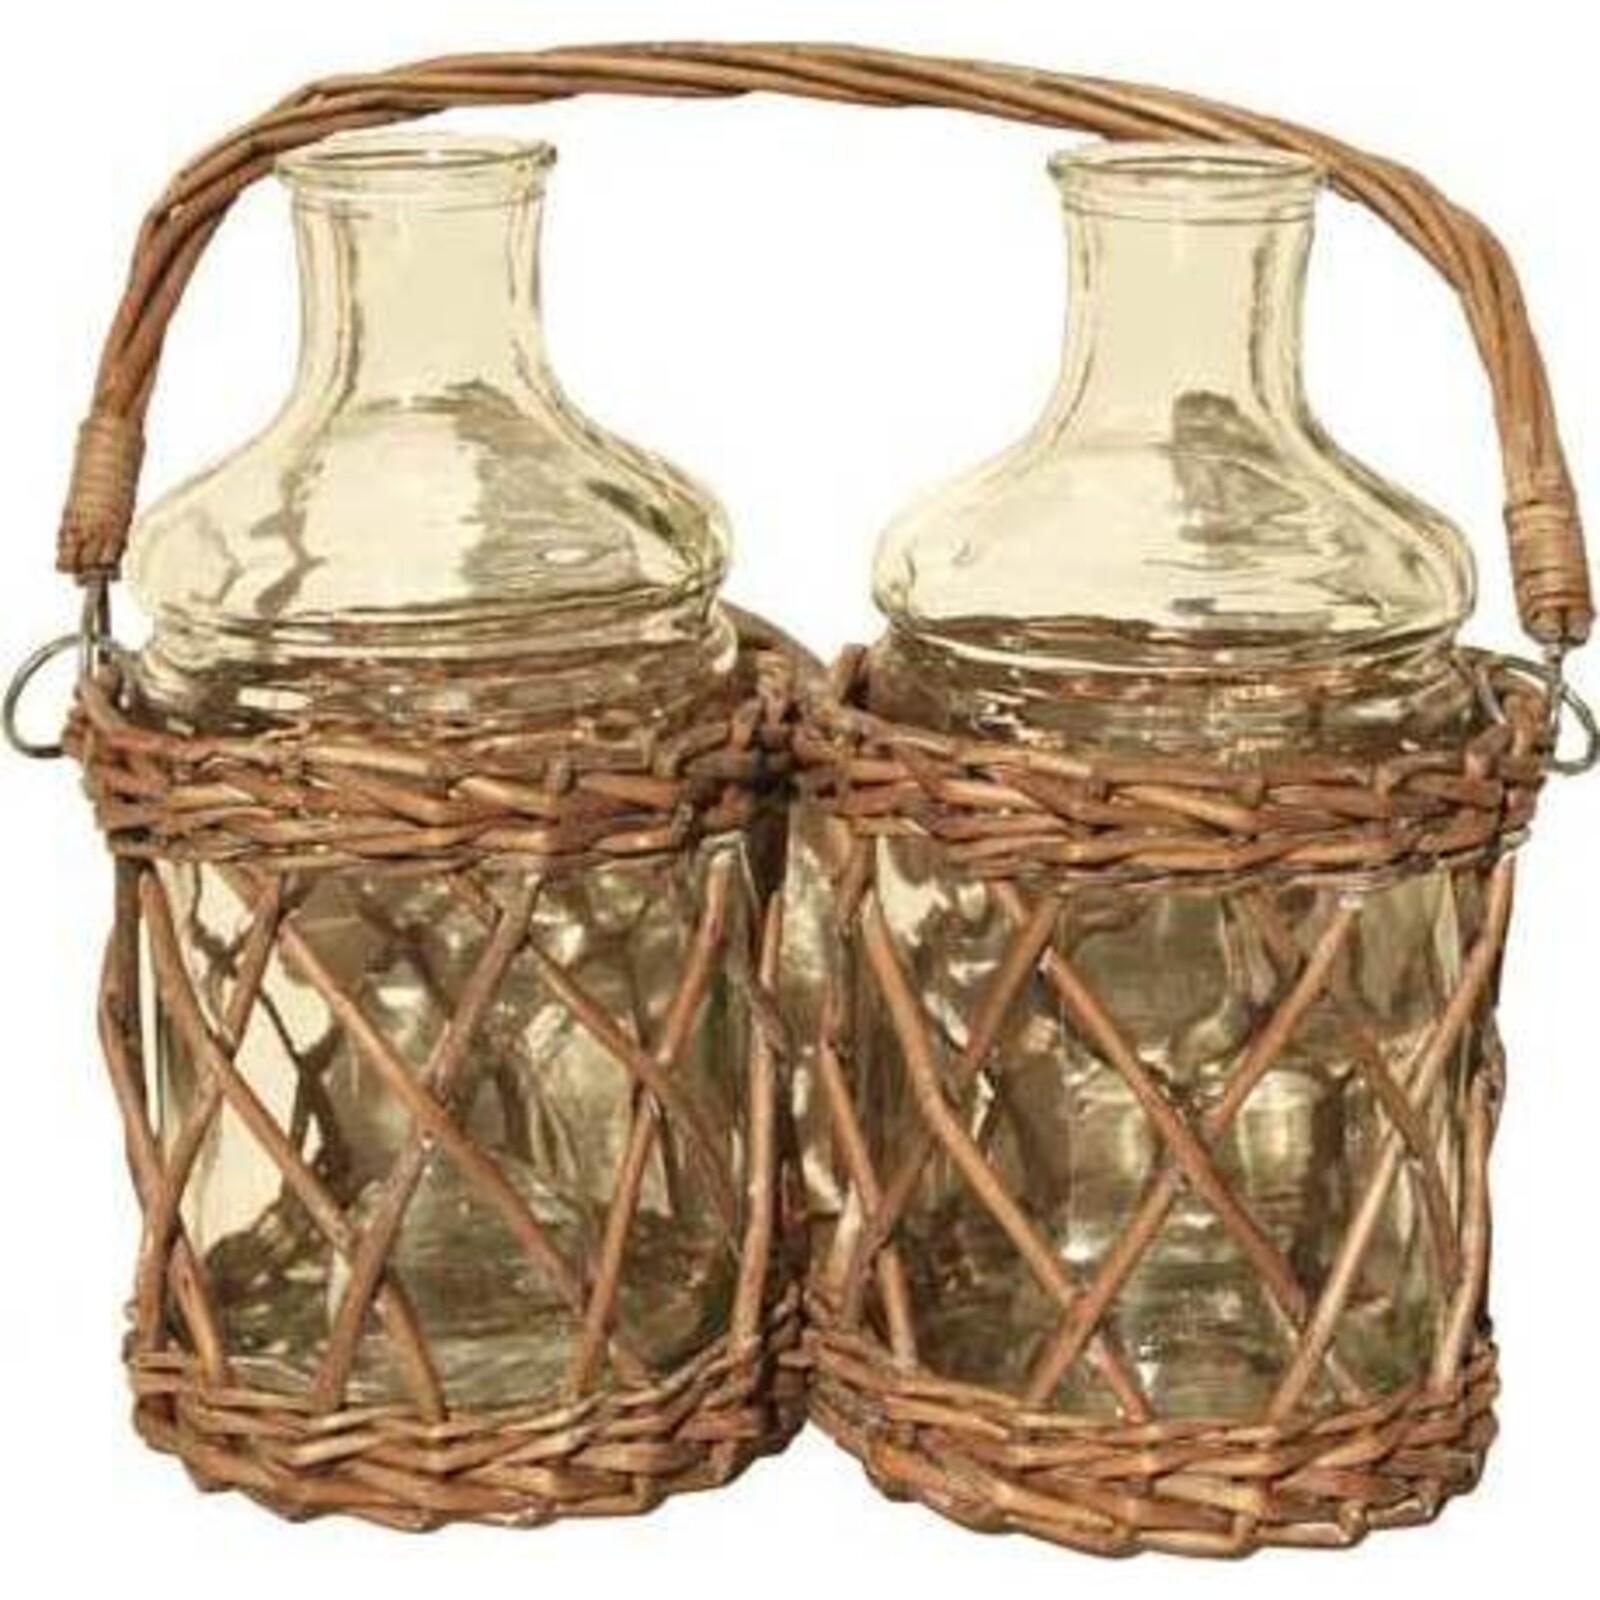 Bottles in Willow Basket